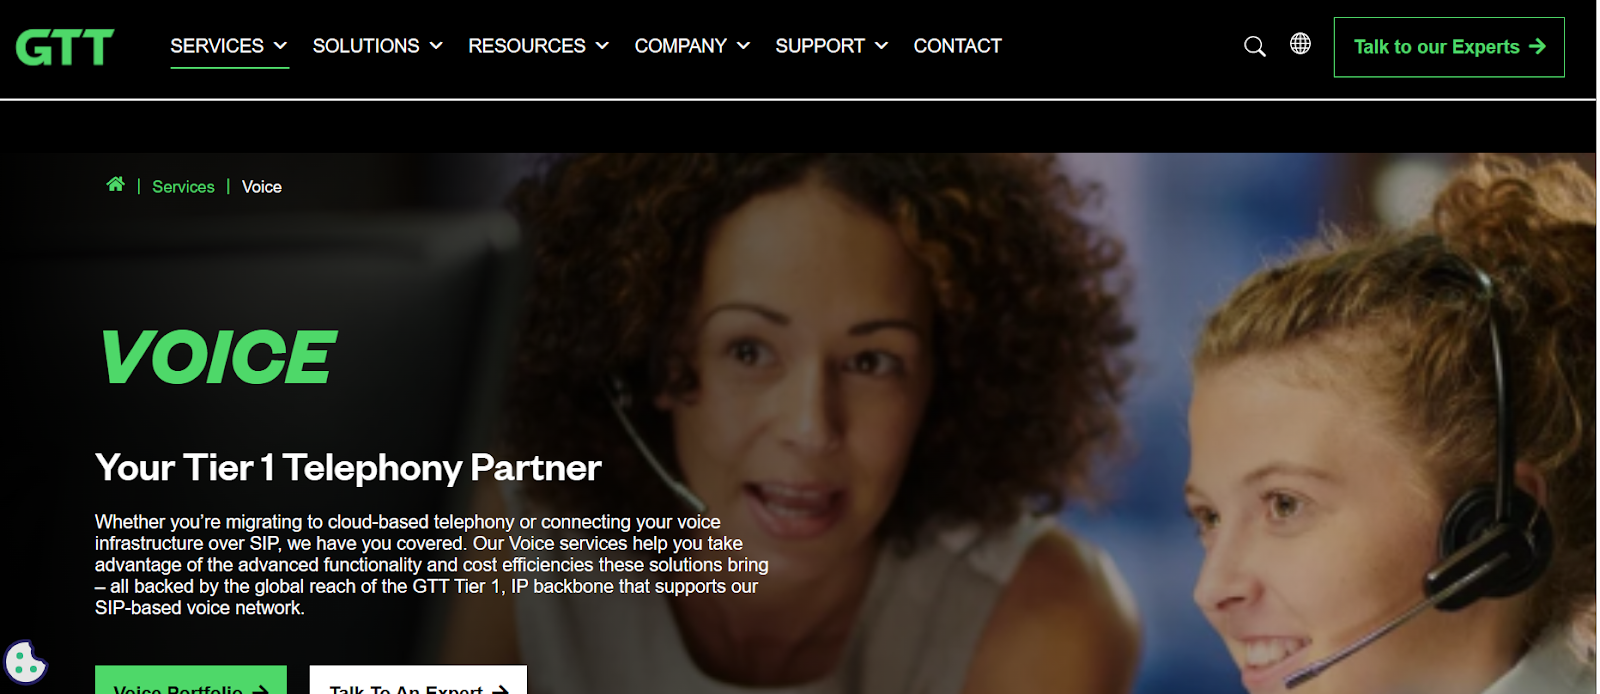 GTT Communications website snapshot highlighting the services it provides.